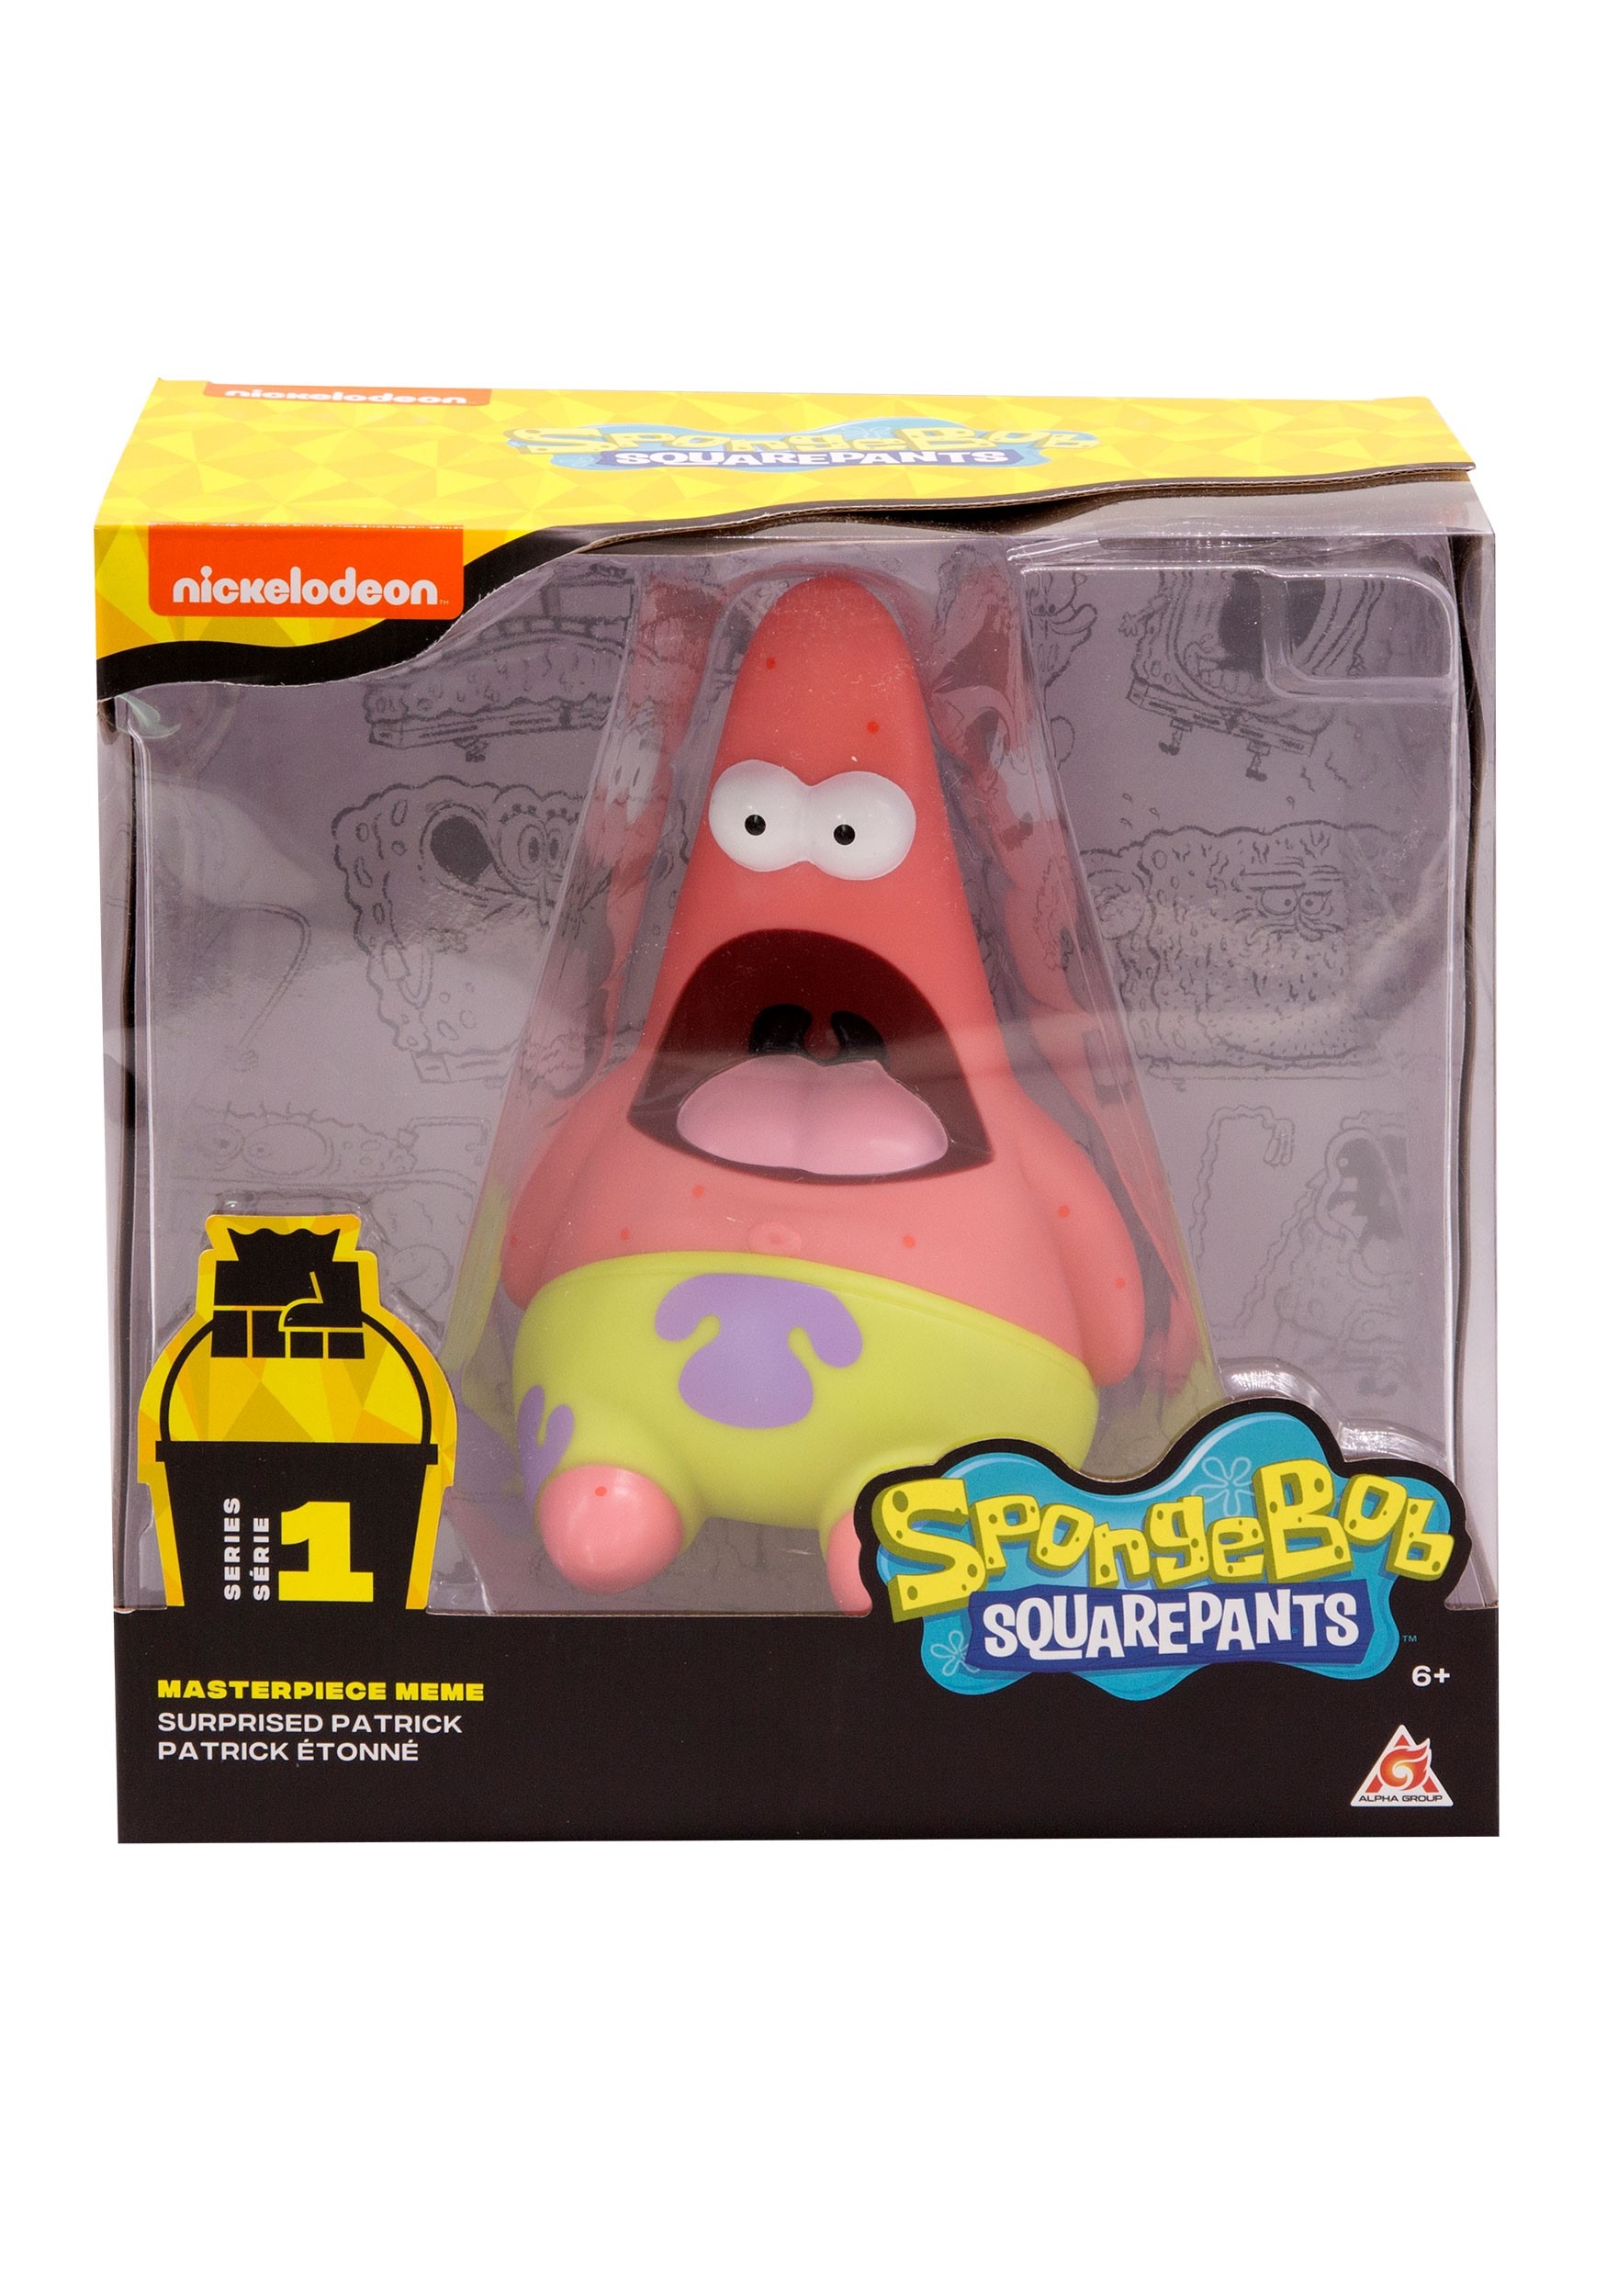 Spongebob Masterpiece Memes Collection: Surprised Patrick Figure